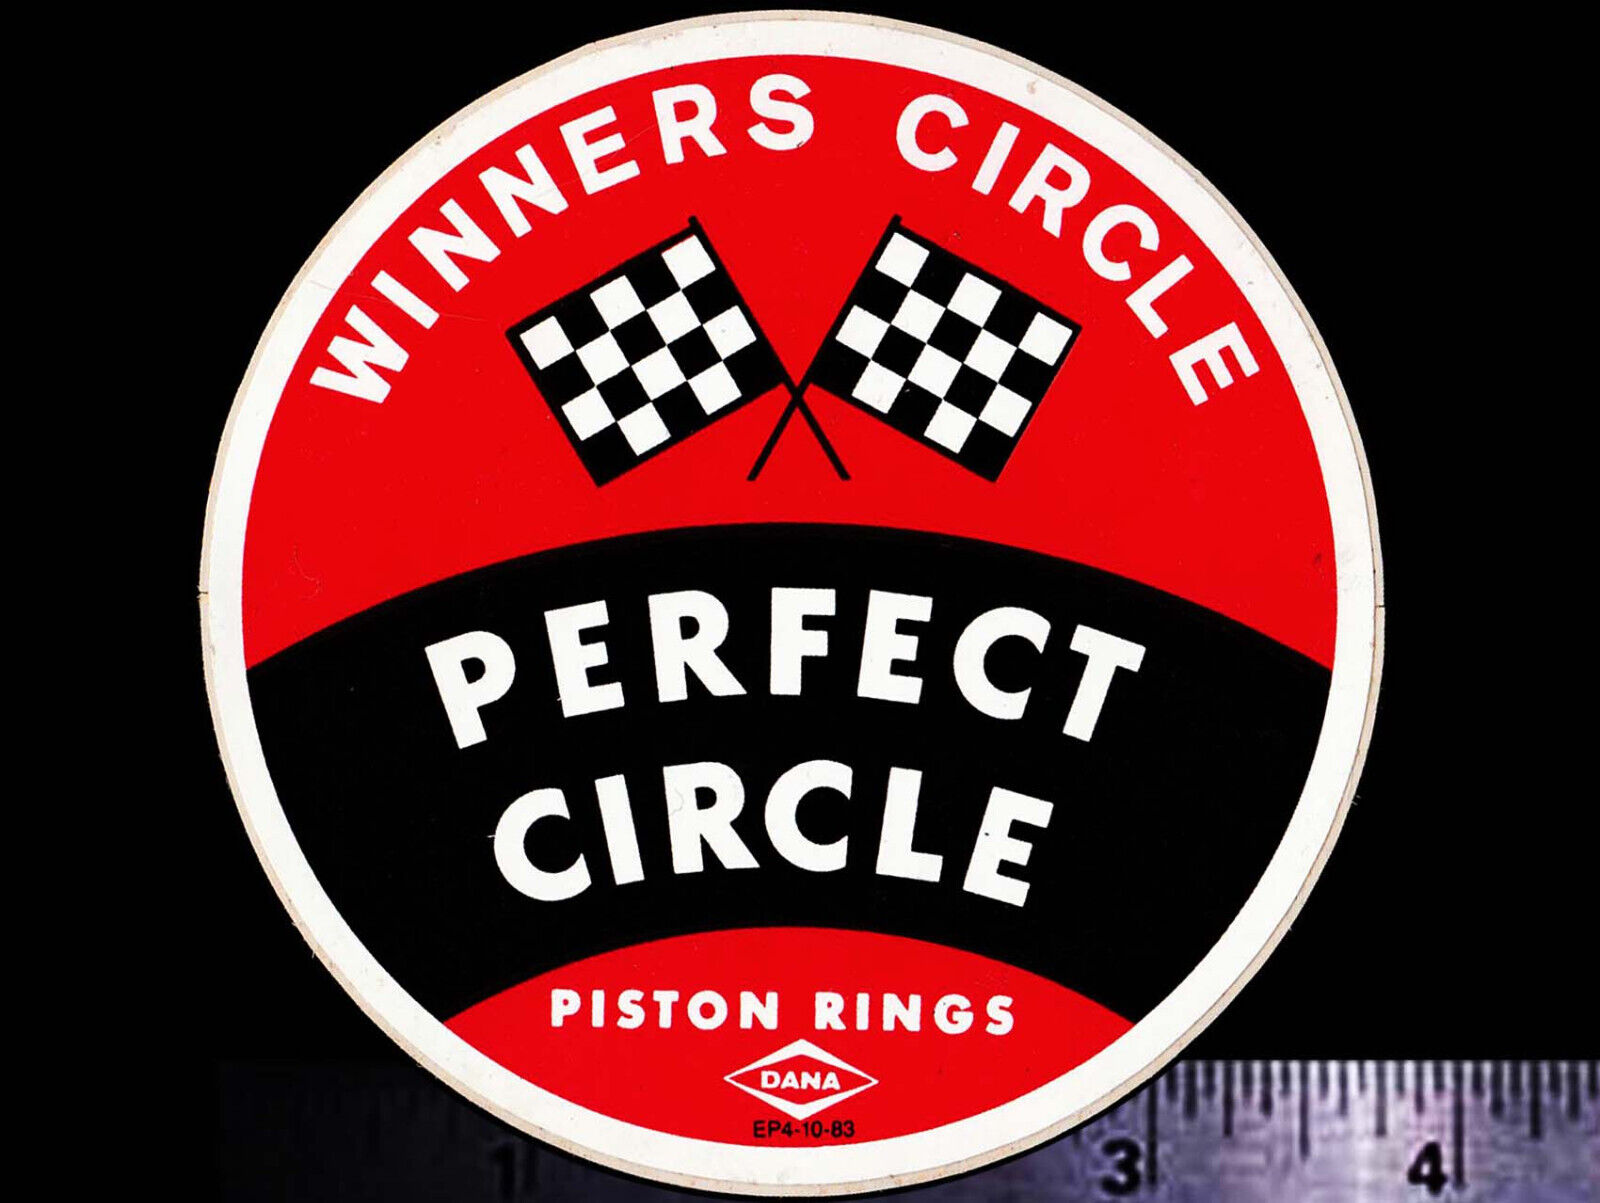 PERFECT CIRCLE Piston Rings - Original Vintage 1970\'s Racing Decal/Sticker DANA